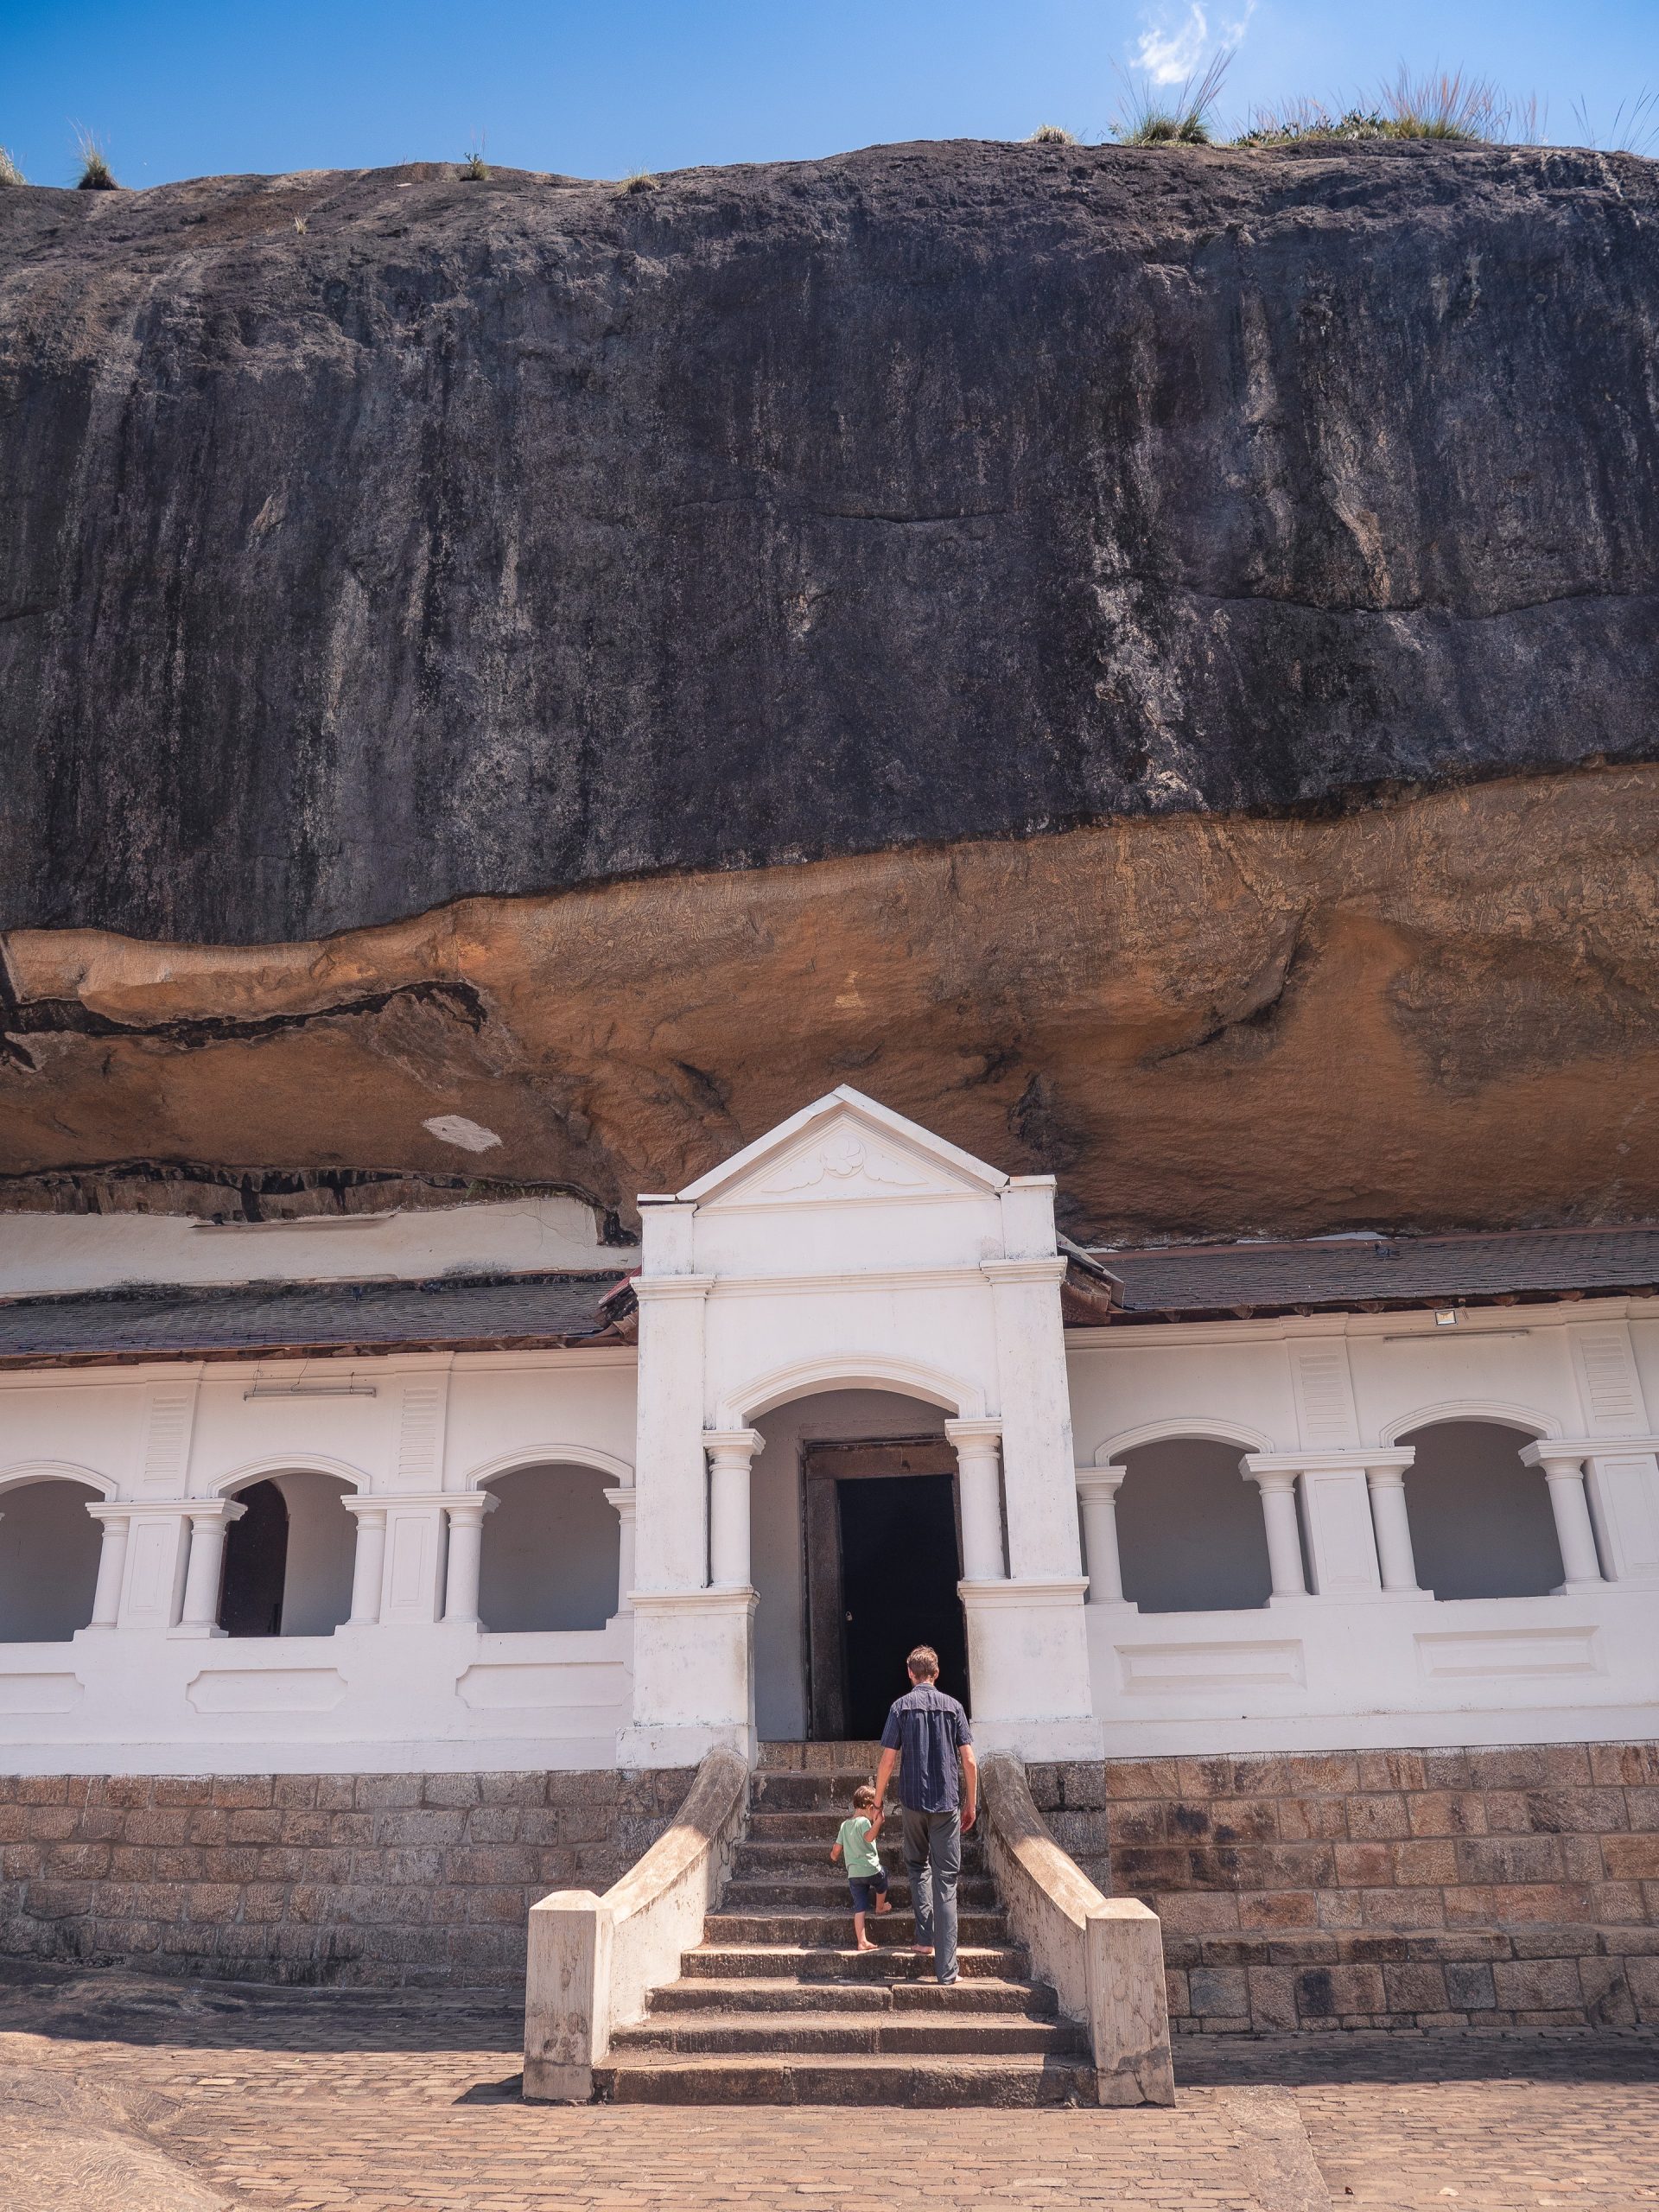 Temple d'or de dambulla au Sri Lanka - grotte sacrée